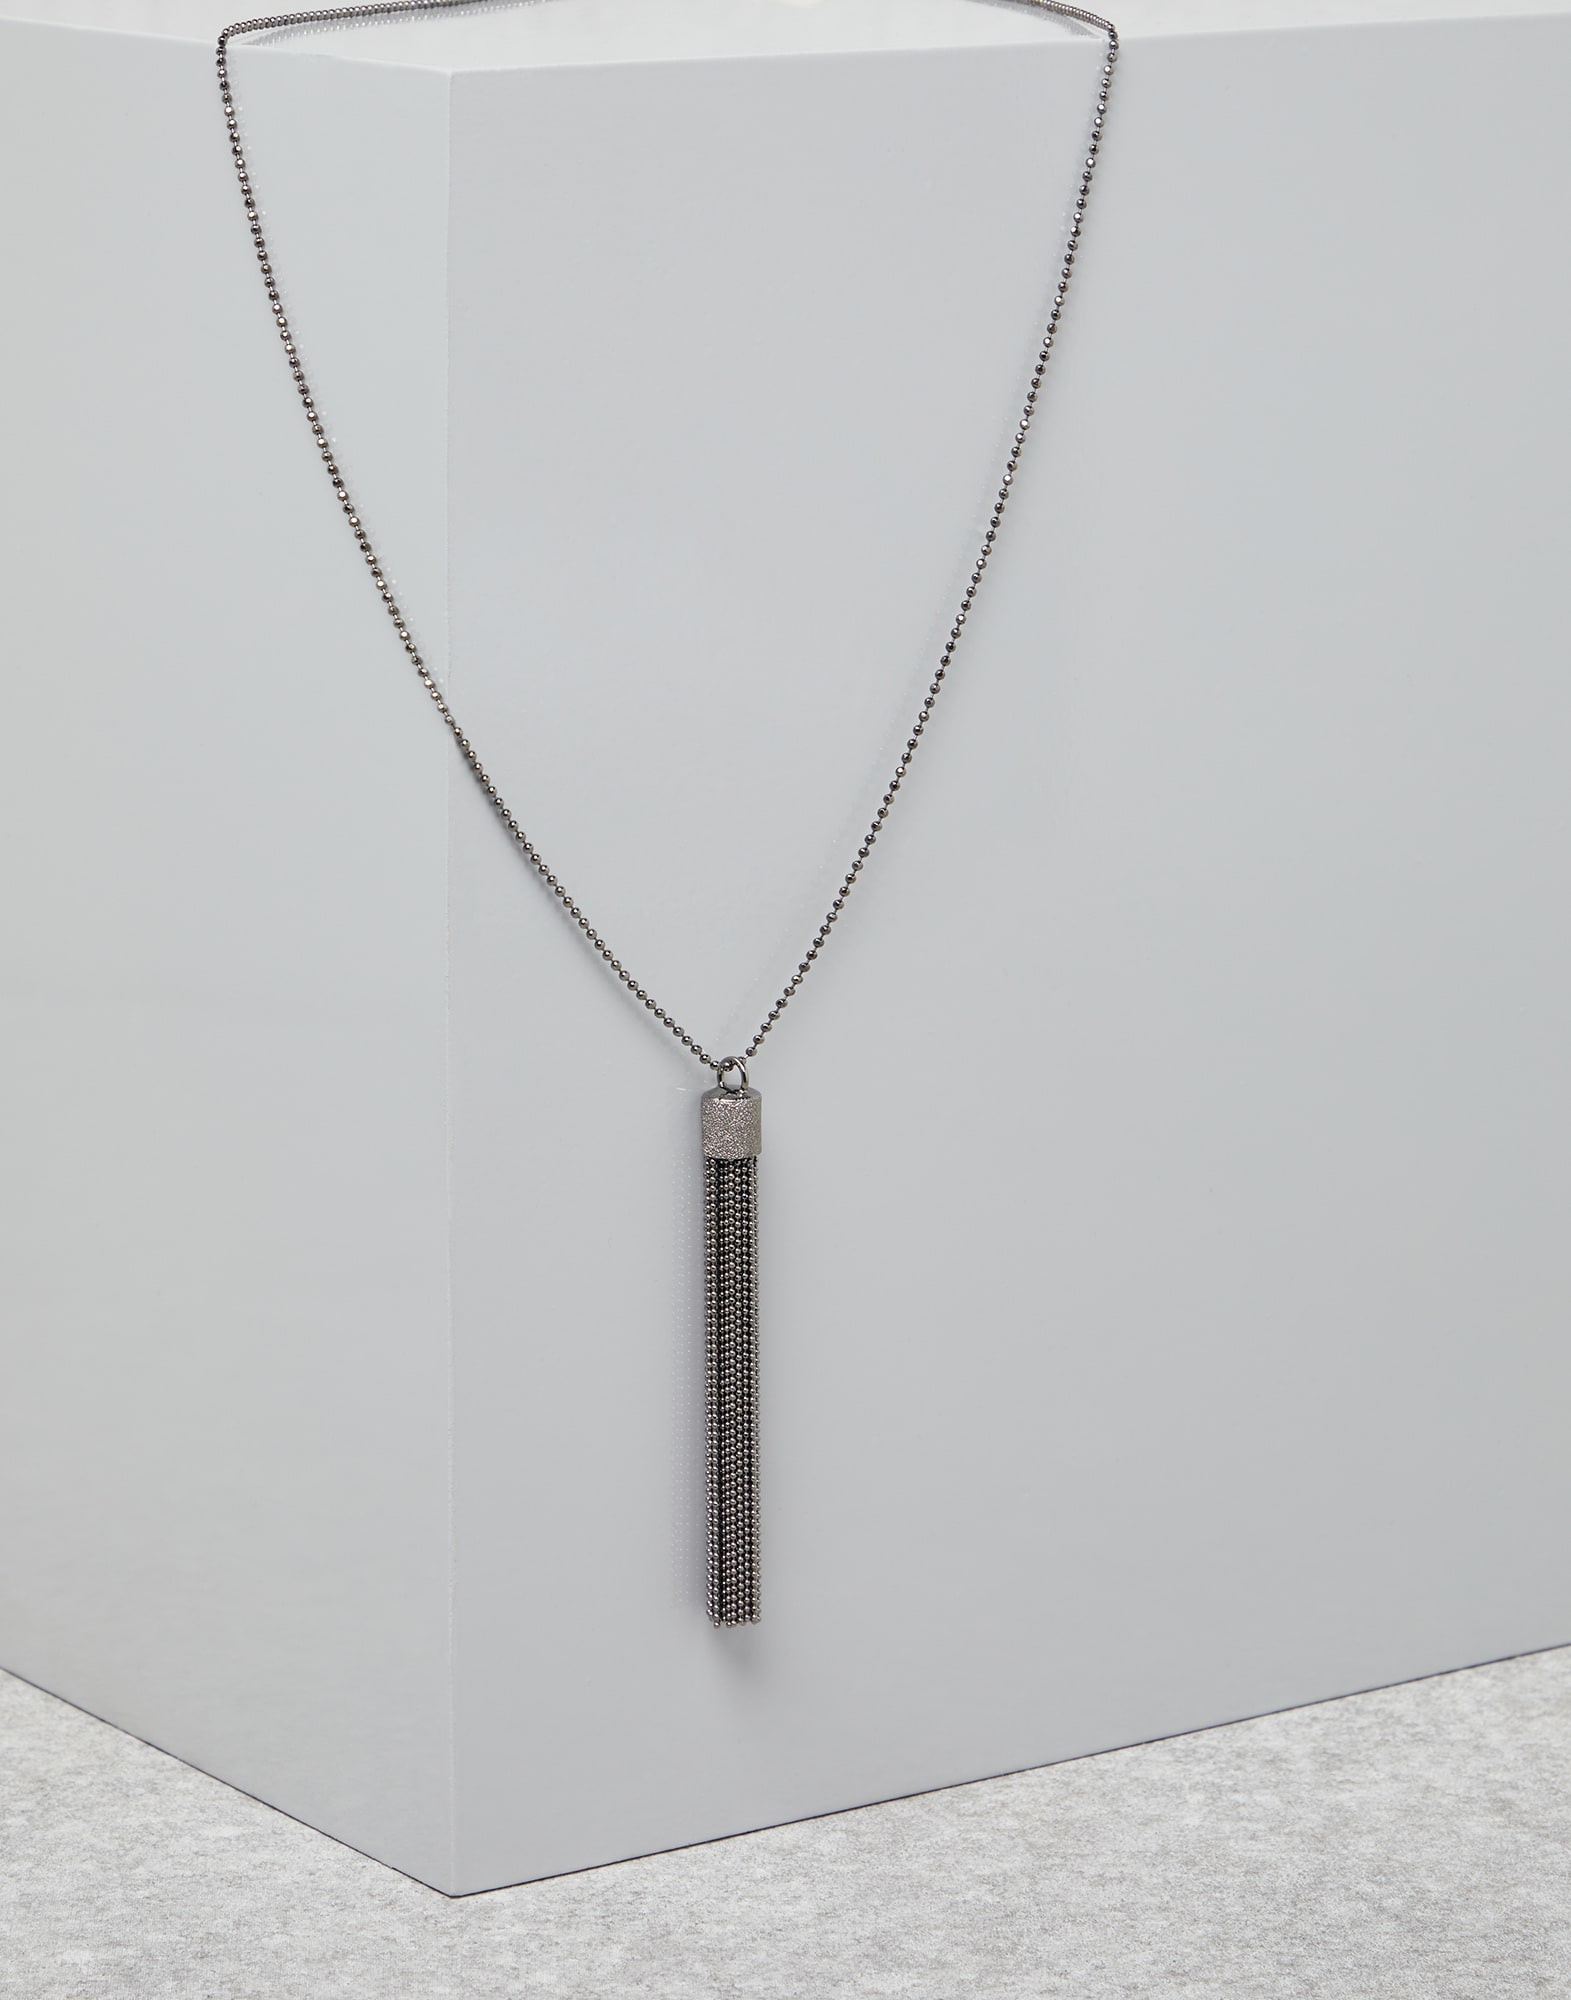 Precious tassel necklace in Sterling Silver - 1